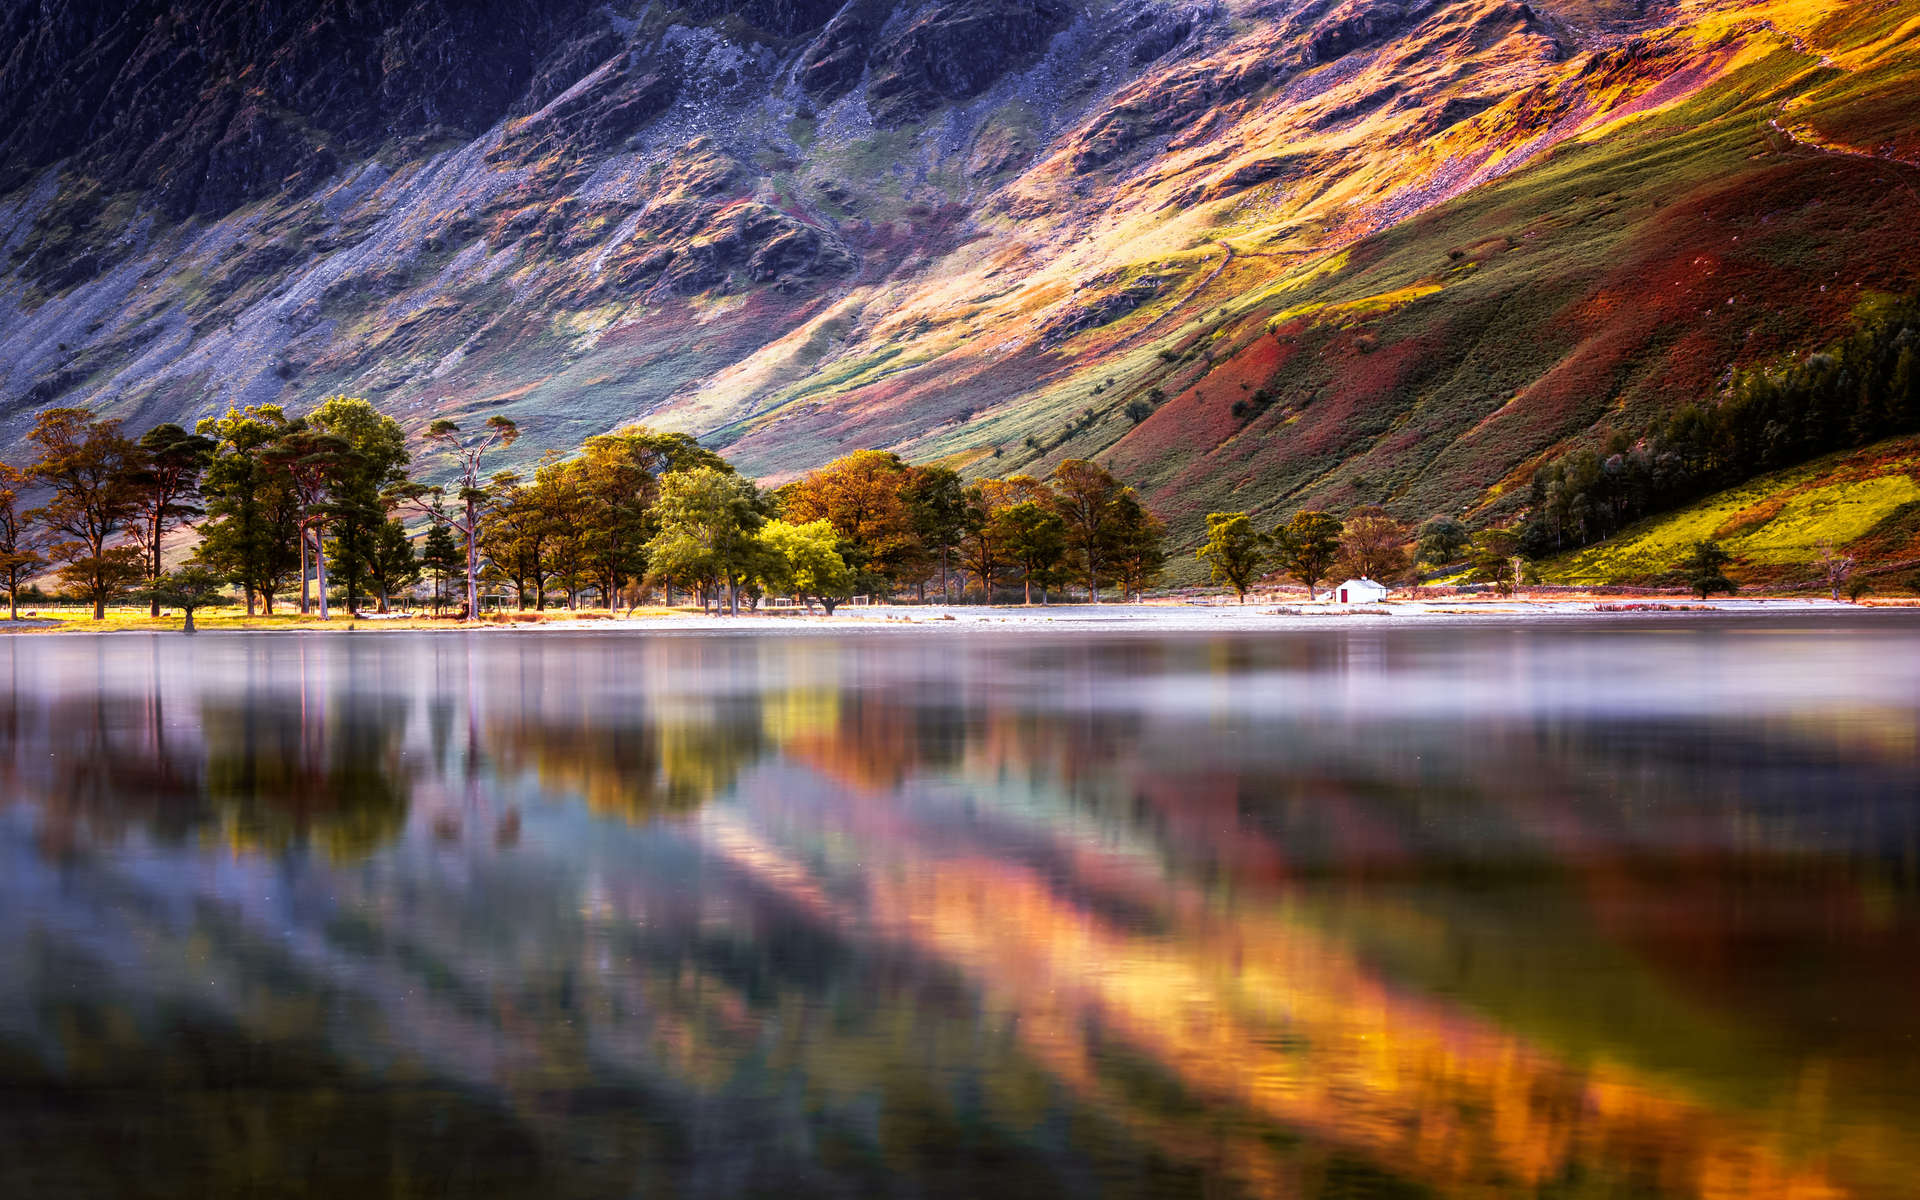 The Lake District, UK